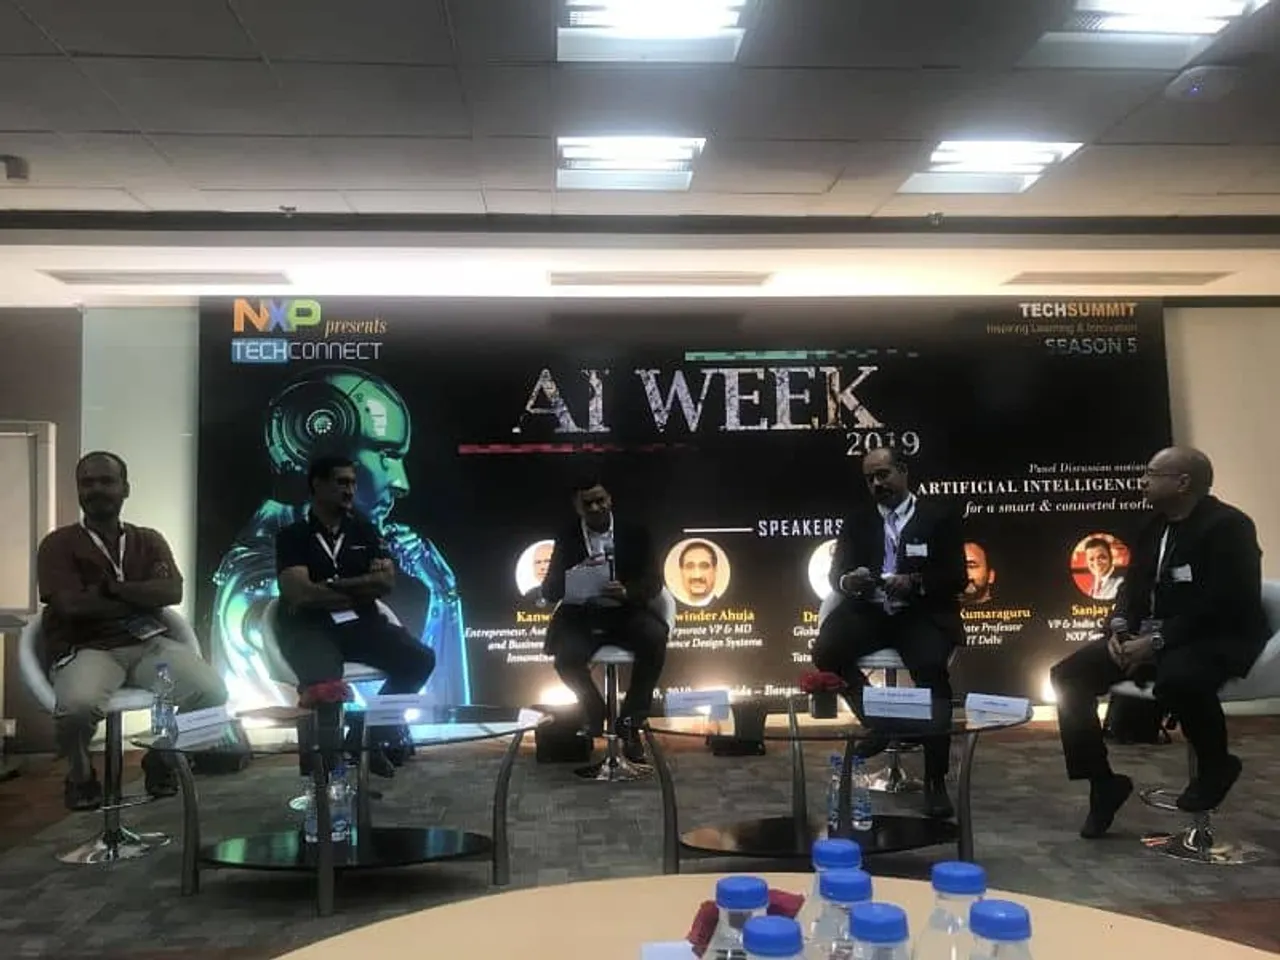 NXP hosts industry AI tech summit